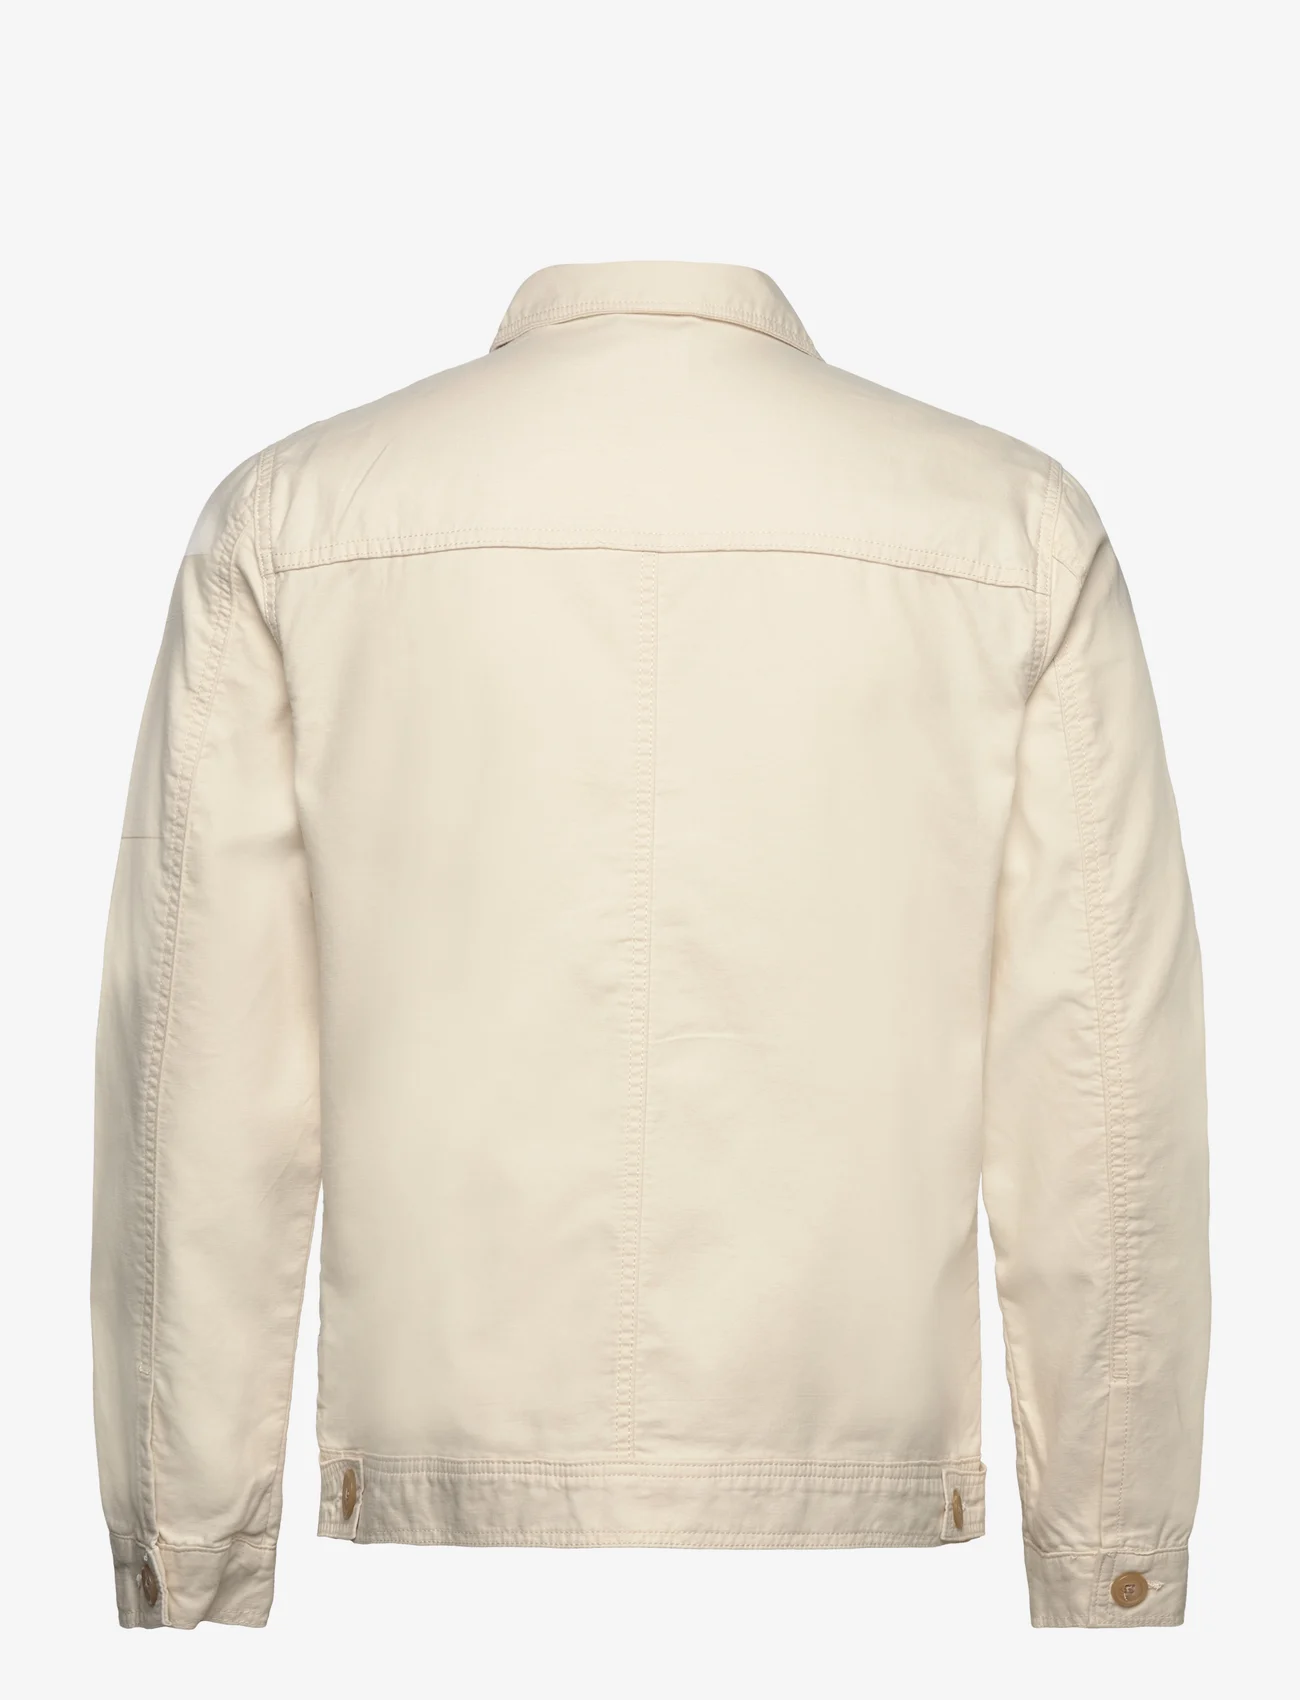 Lindbergh - Cropped length overshirt - män - cream white - 1